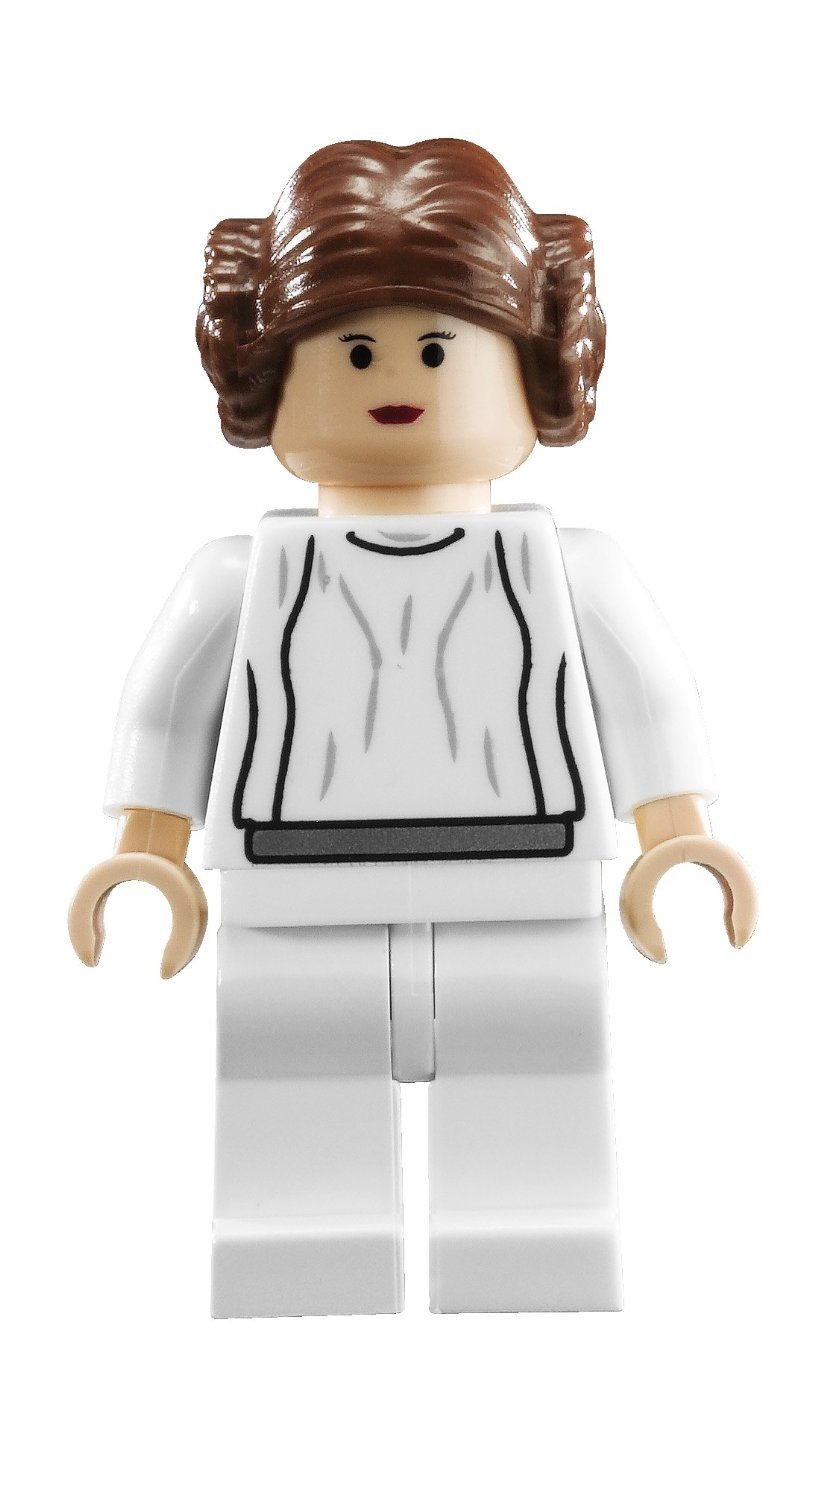 Lego Star Wars Princess Leia White Dress Minifigure